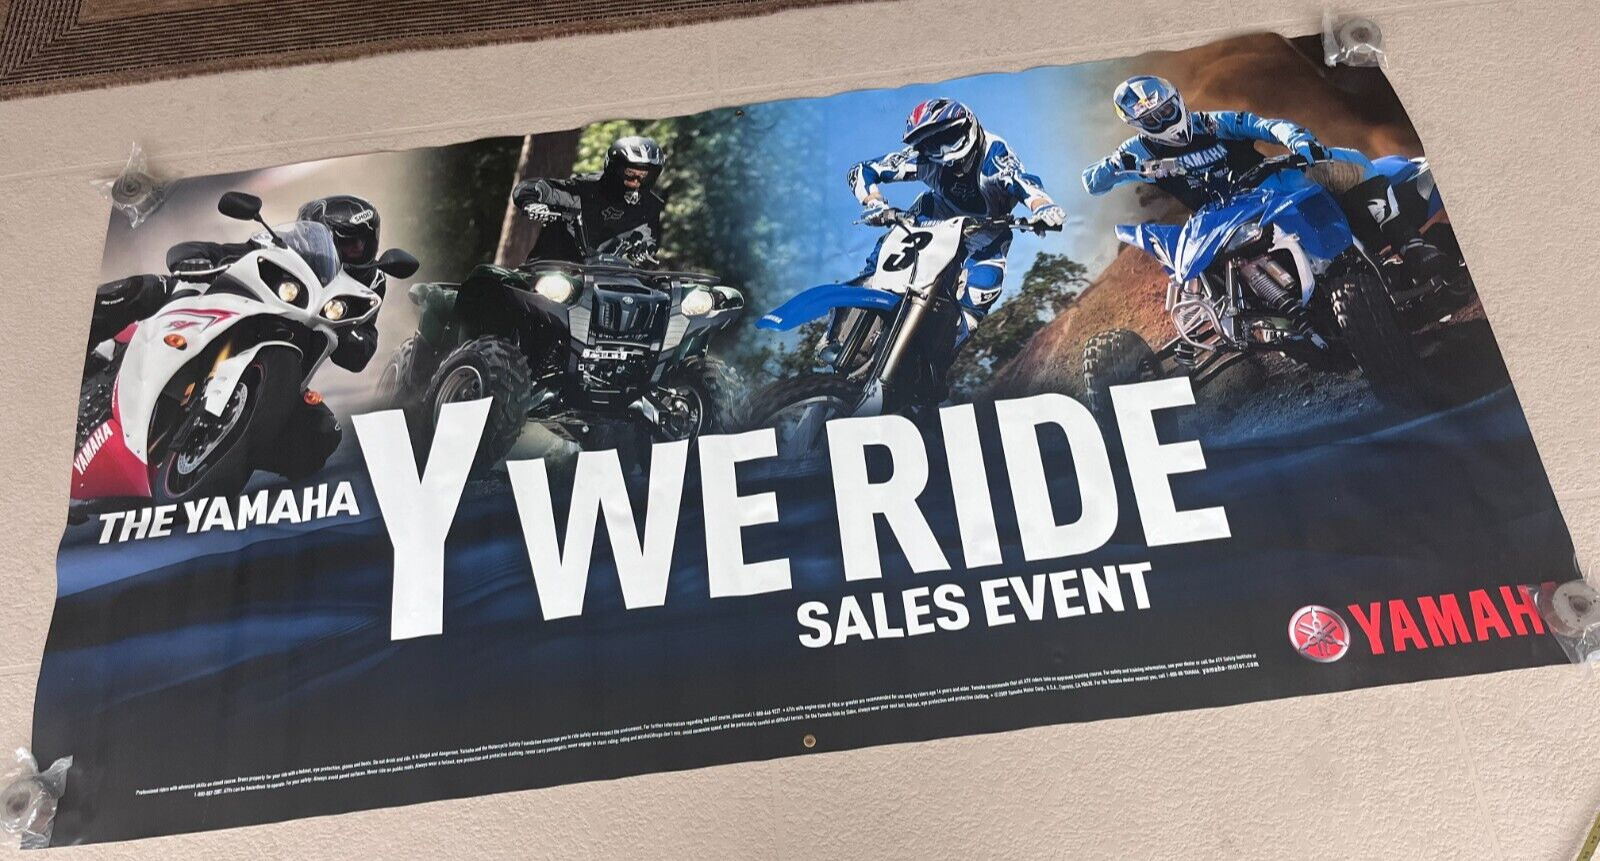 Genuine Yamaha Y We Ride Sales Event Showroom Banner 92\